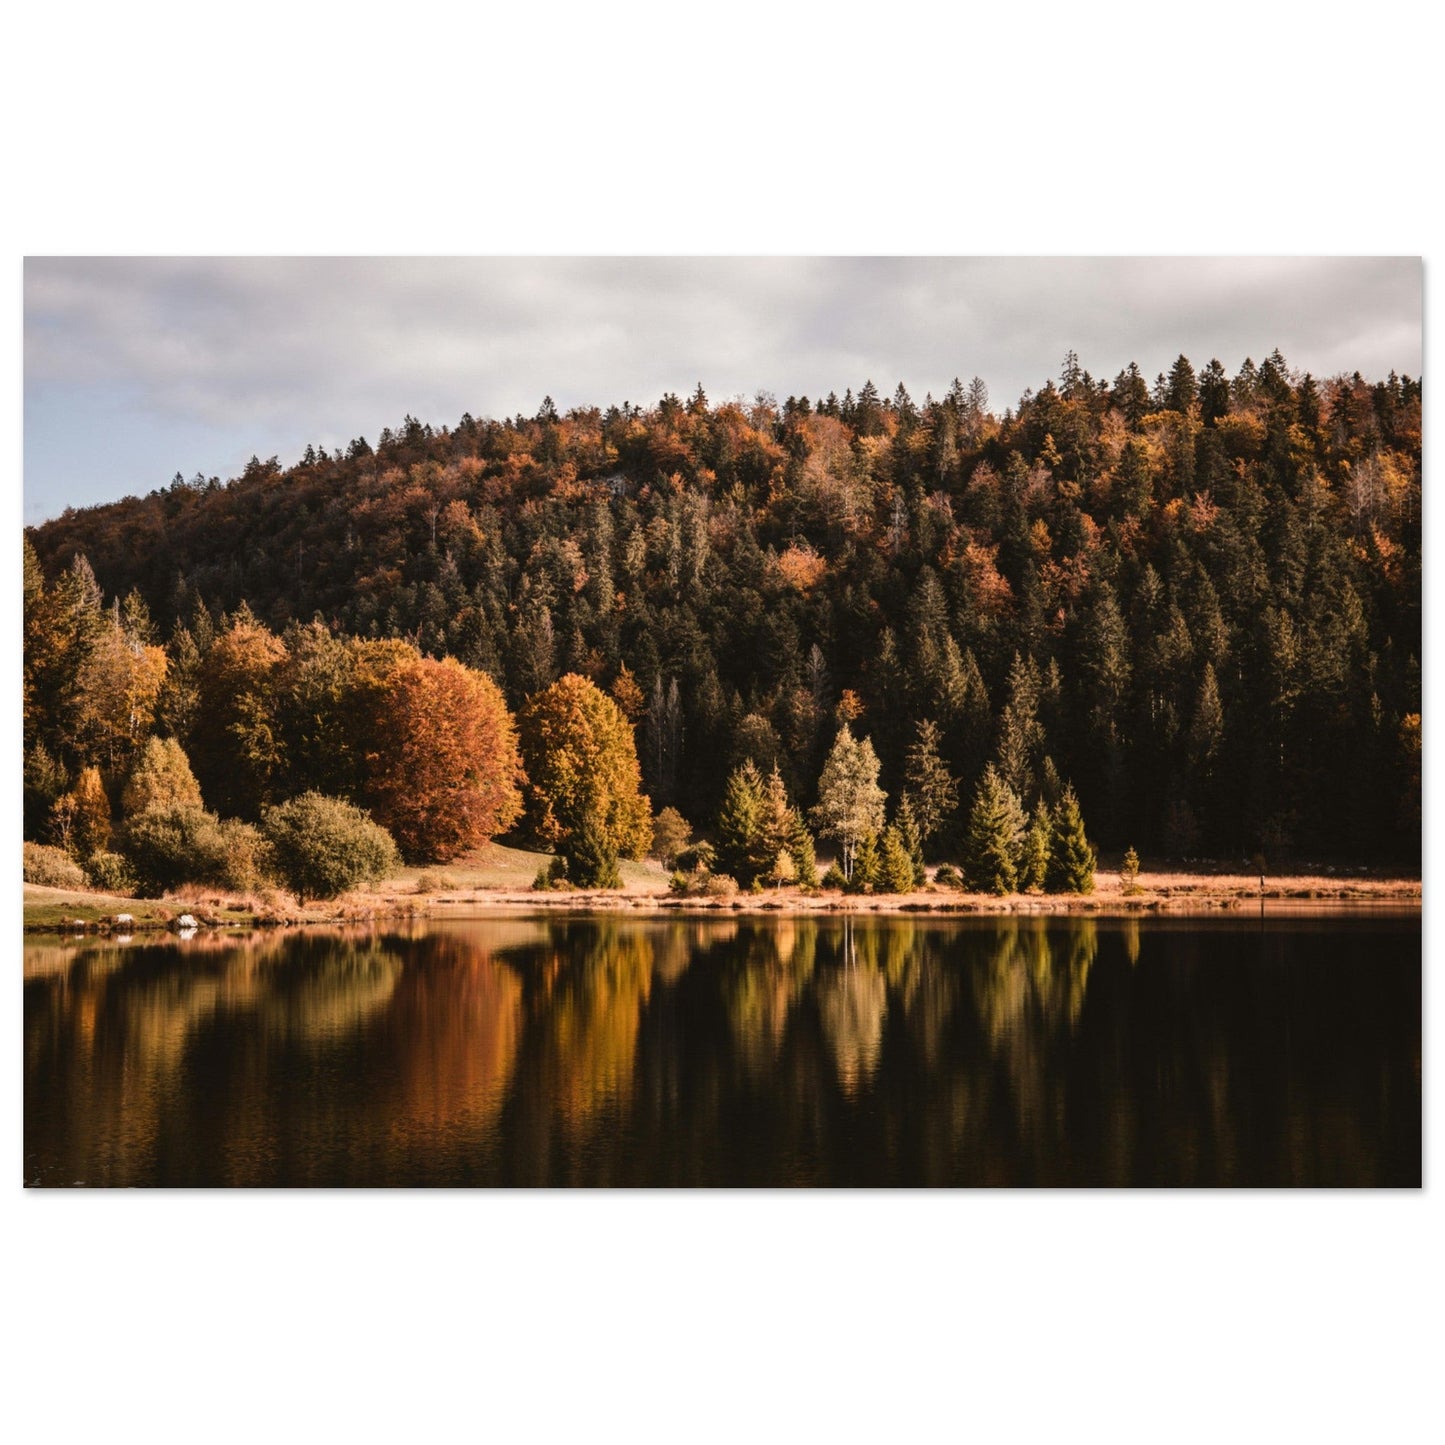 Vente Photo du lac Genin en automne, Jura #3 - Tableau photo alu montagne